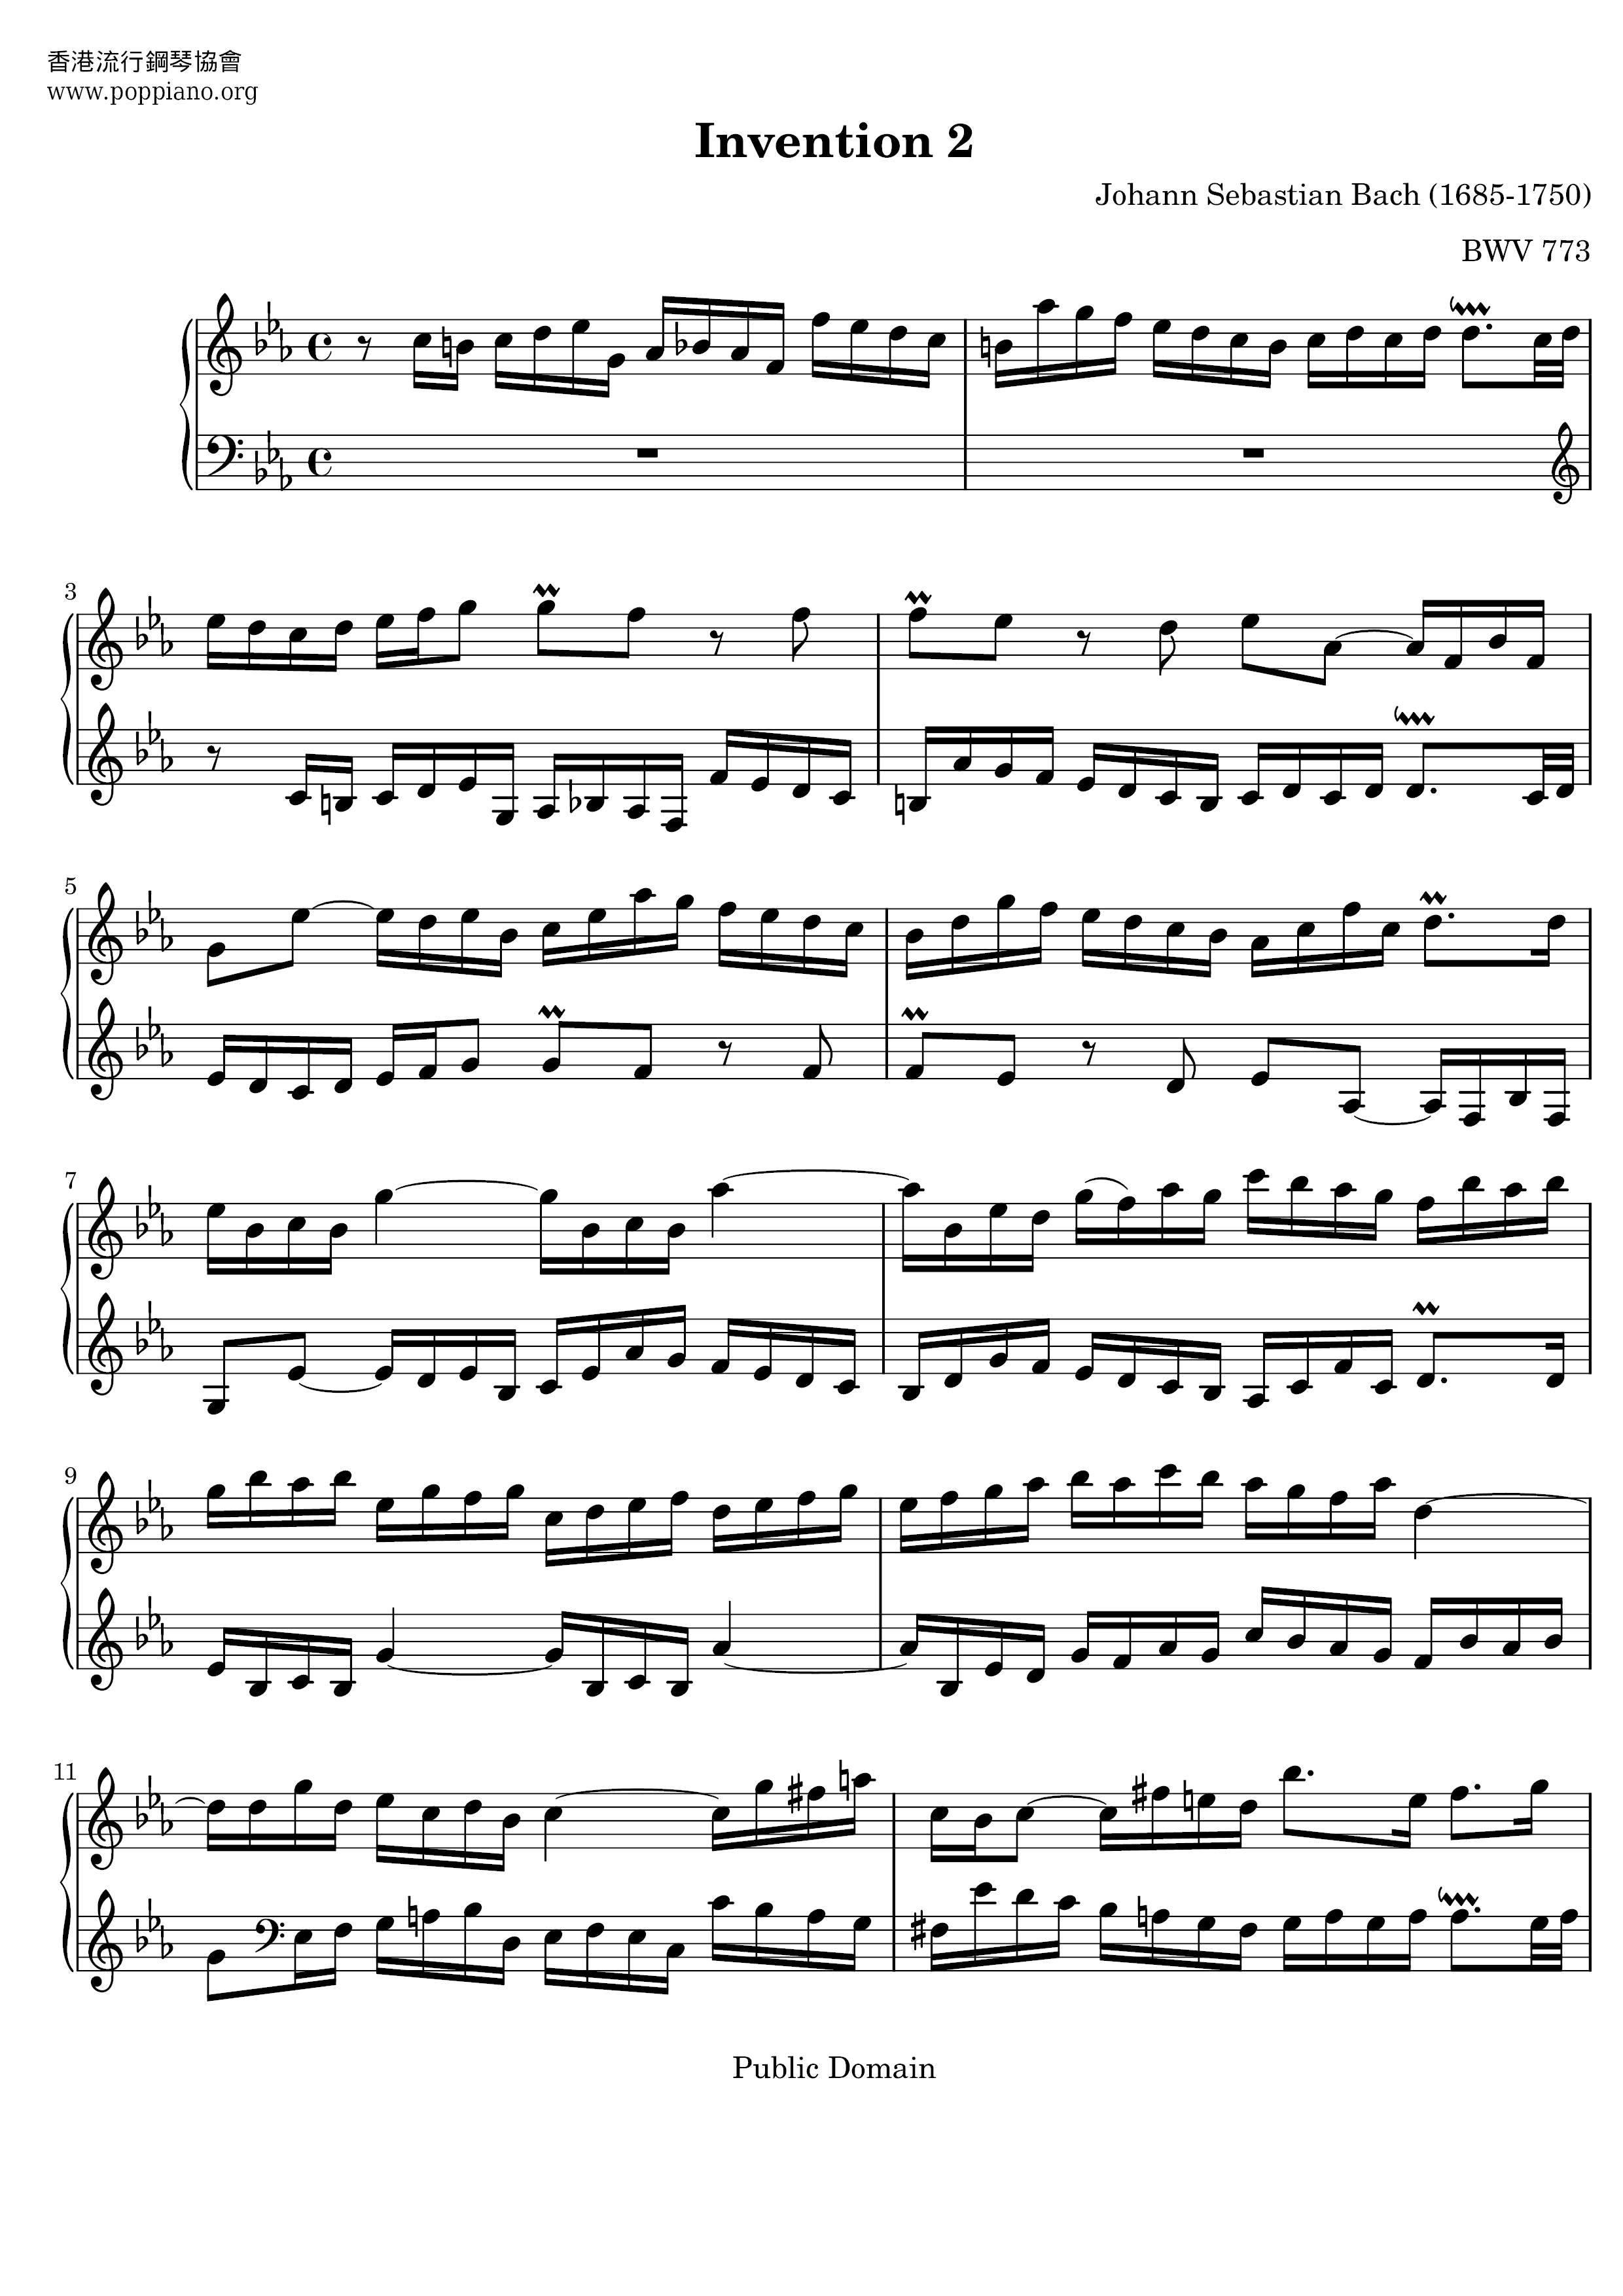 Invention 2, BWV 773 Score